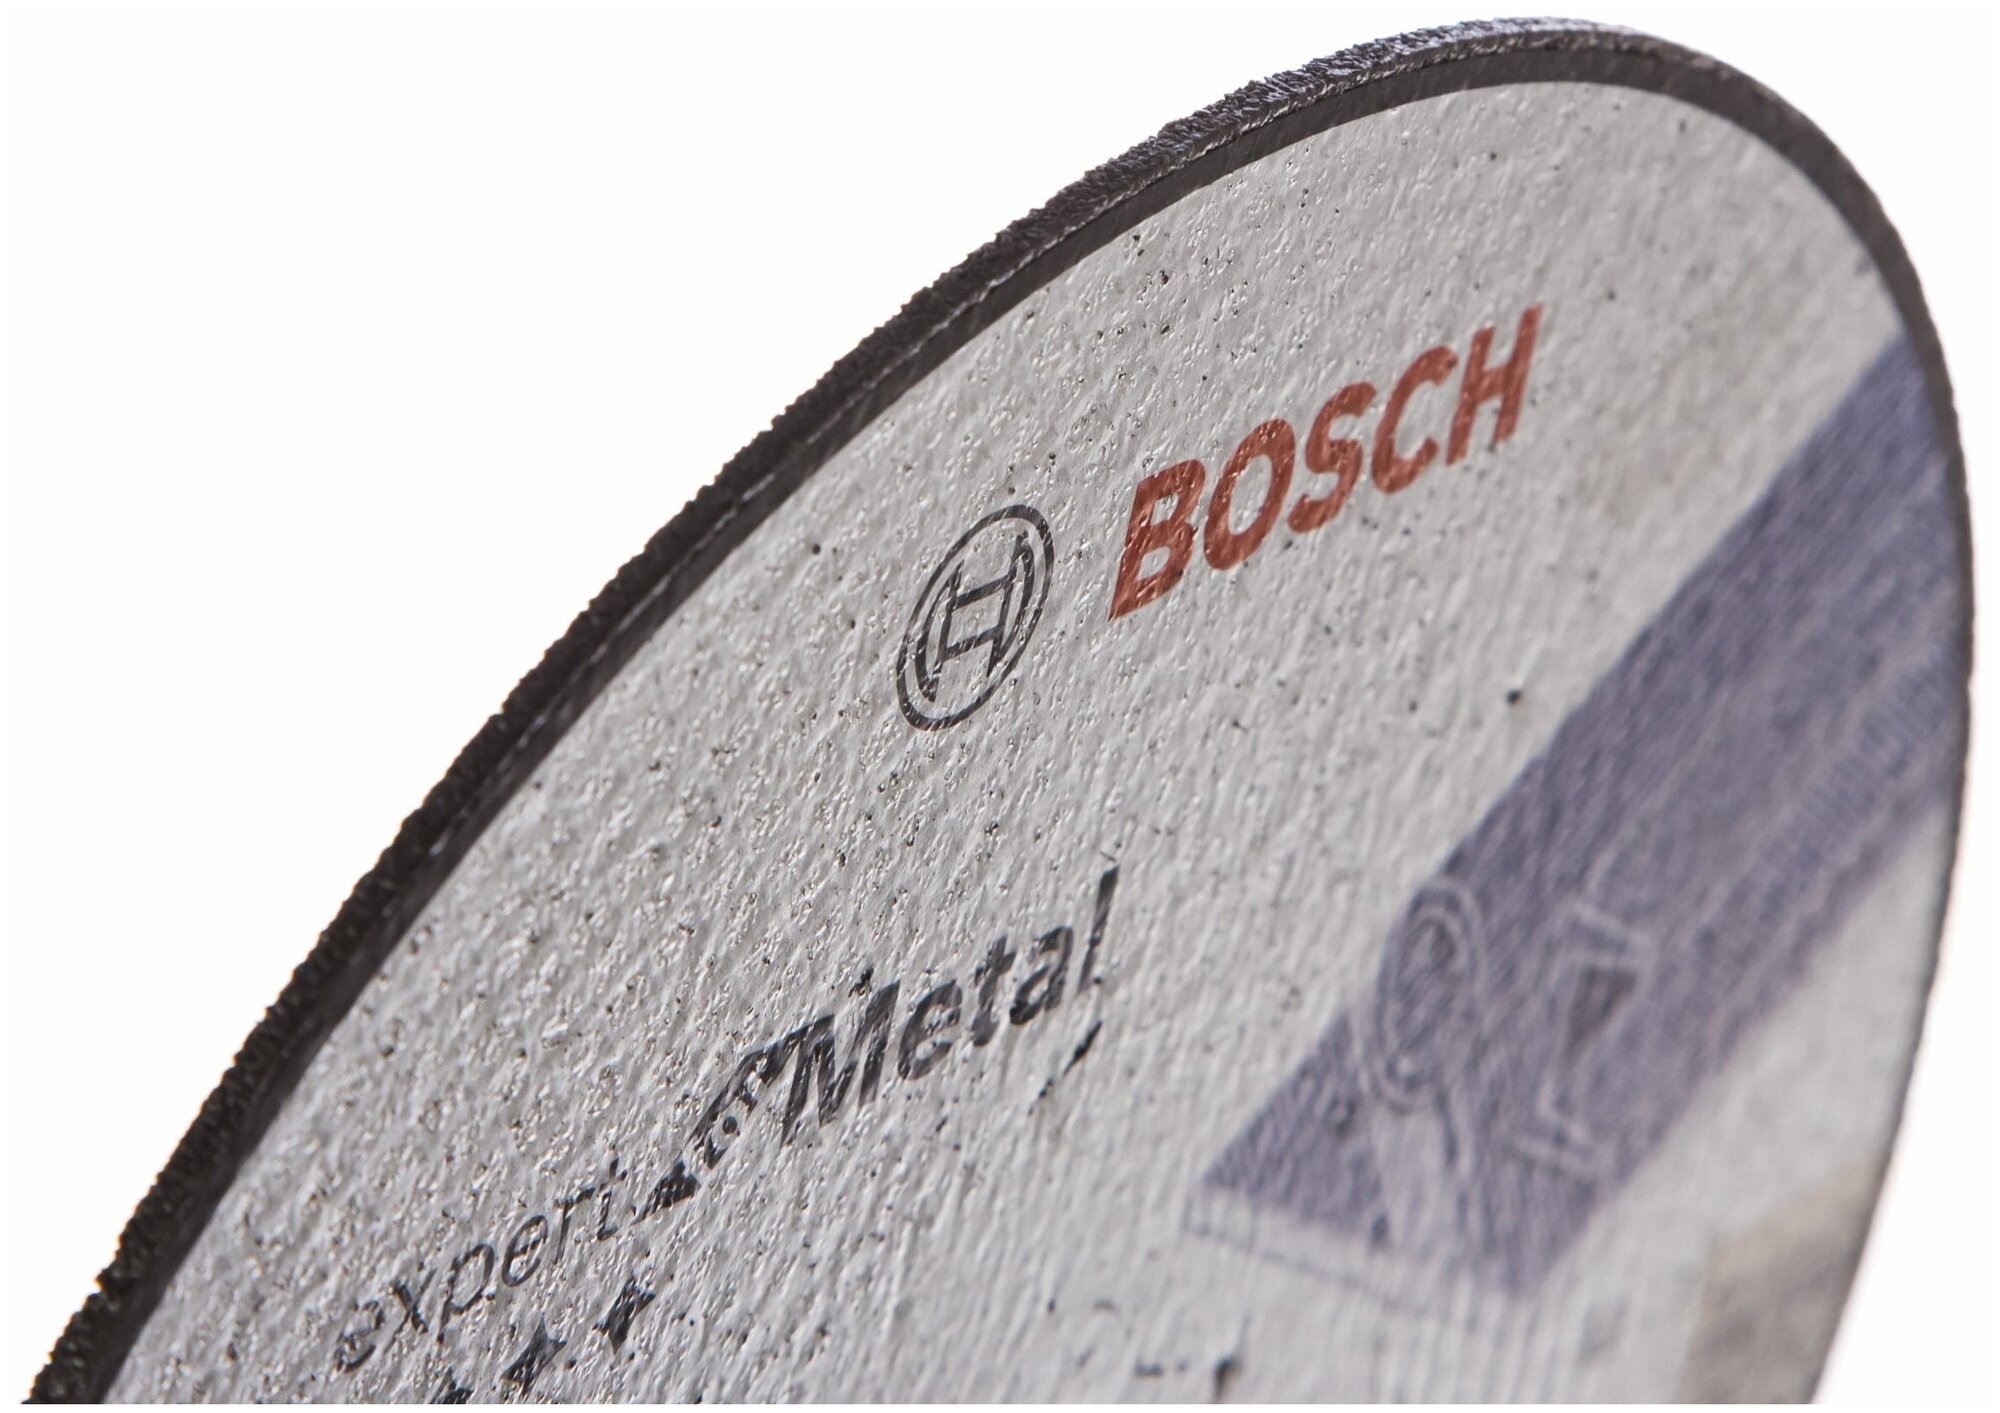 Диск отрезной по металлу (230х22,2 мм) Bosch 2.608.600.324